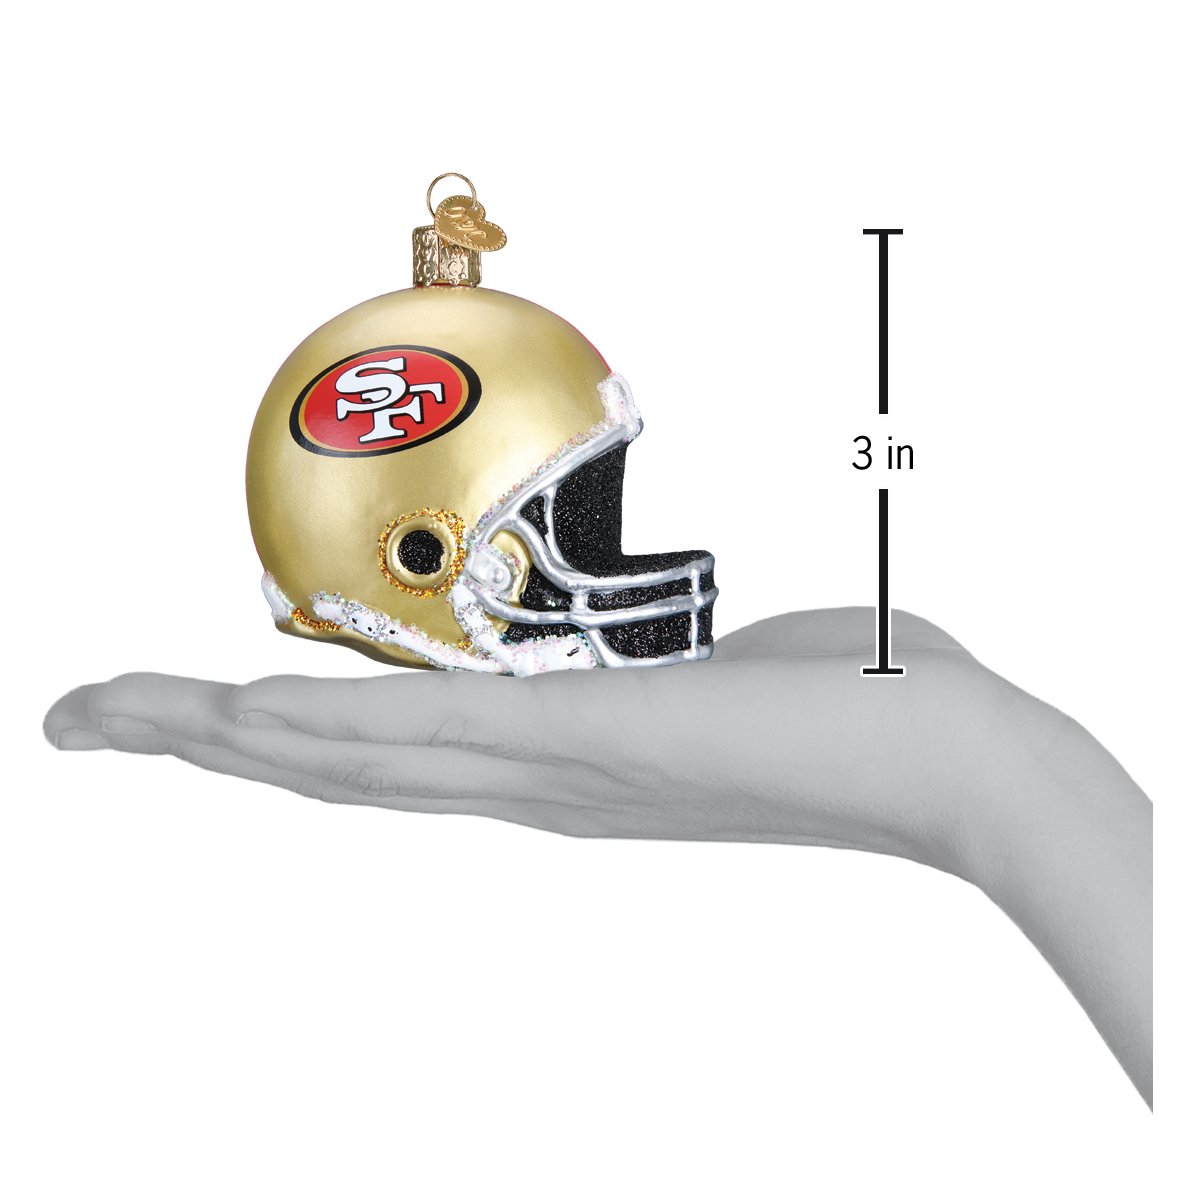 Old World Christmas - SF 49ers Helmet Ornament    